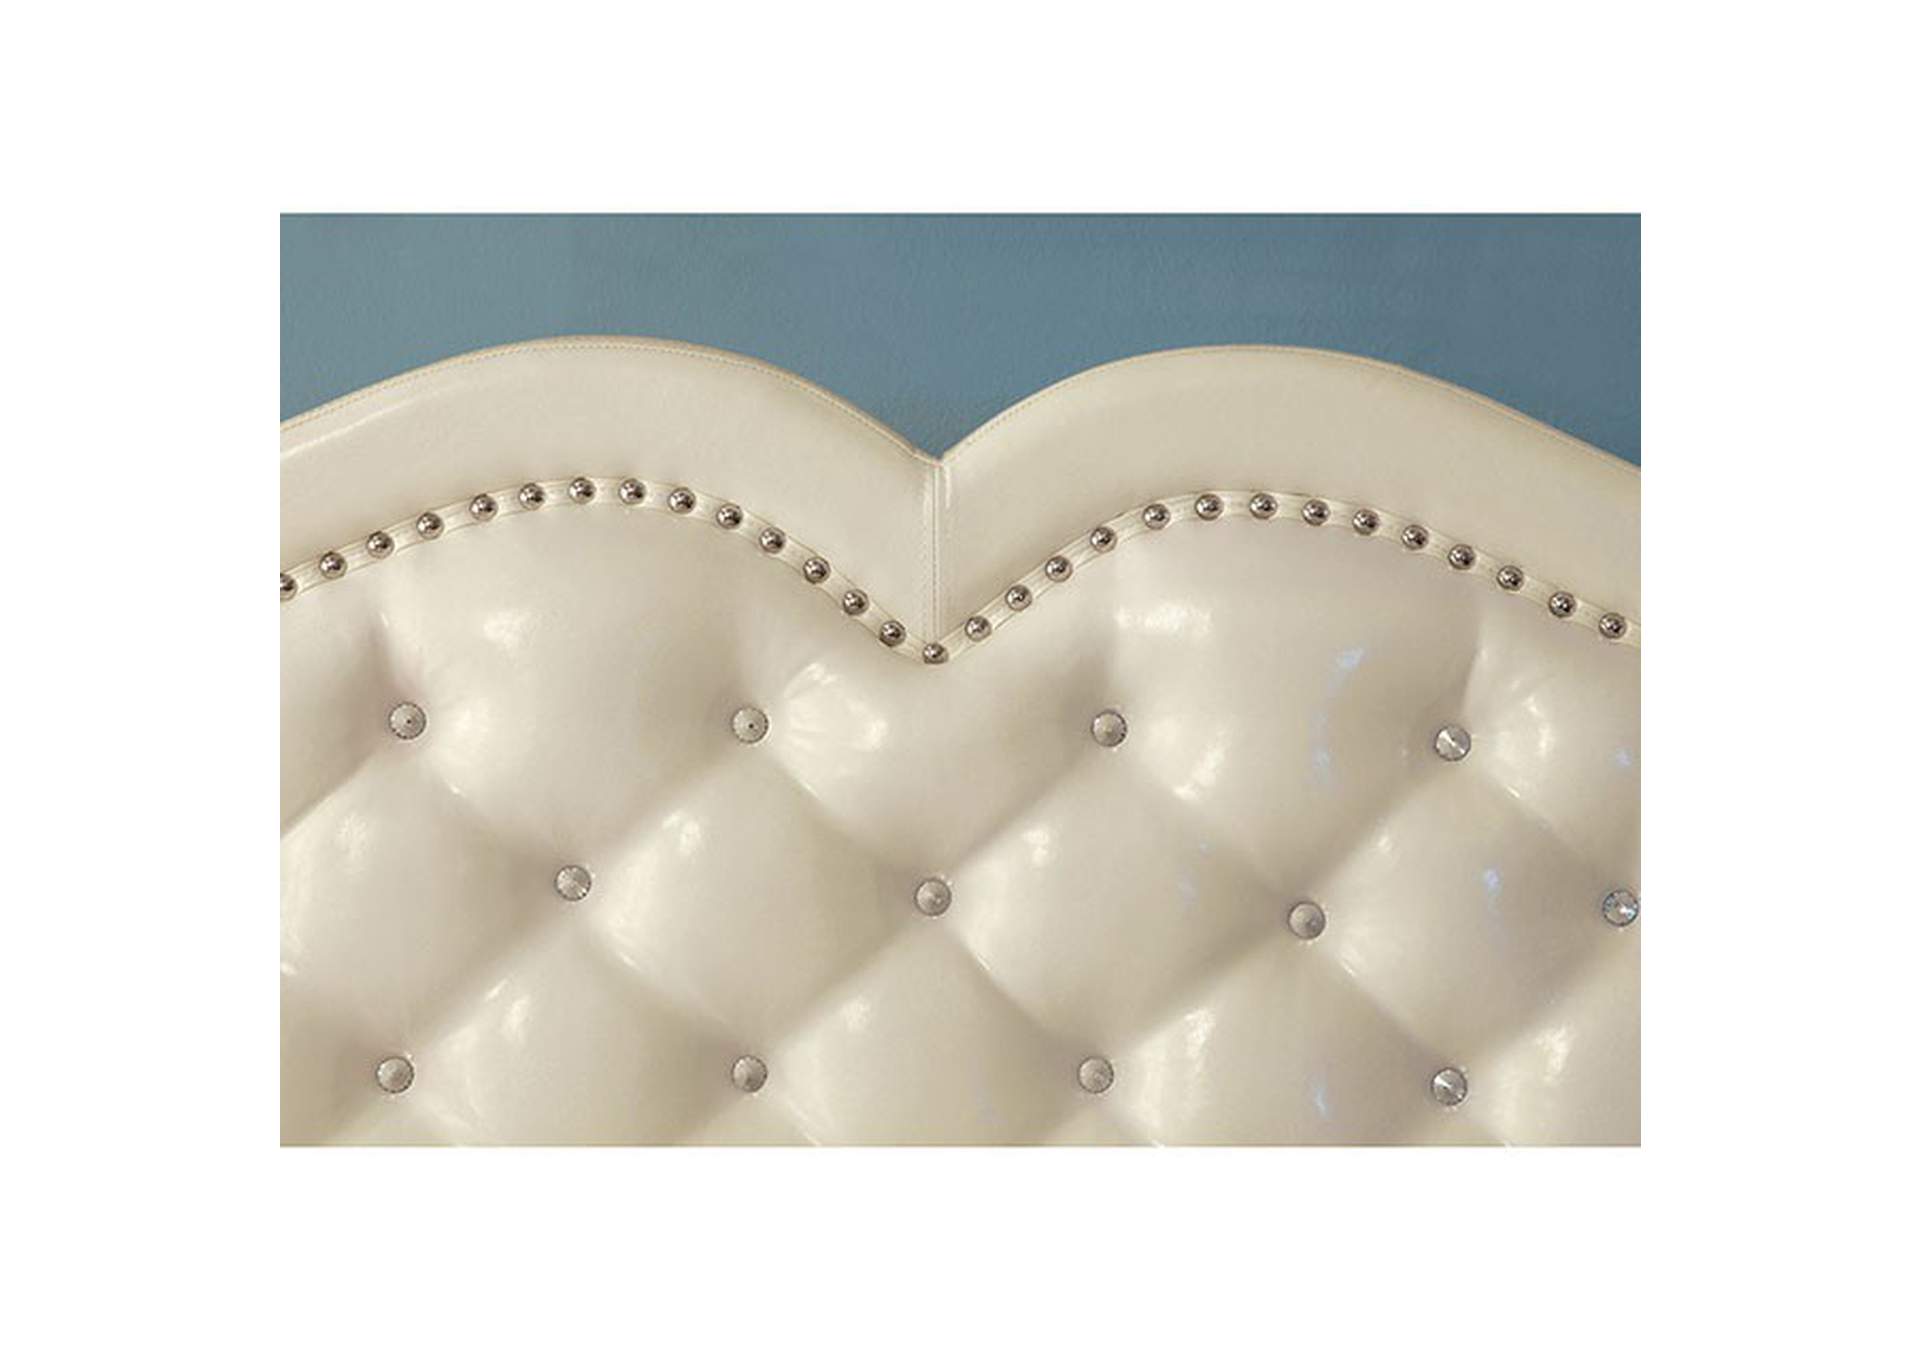 Monroe Queen Bed,Furniture of America